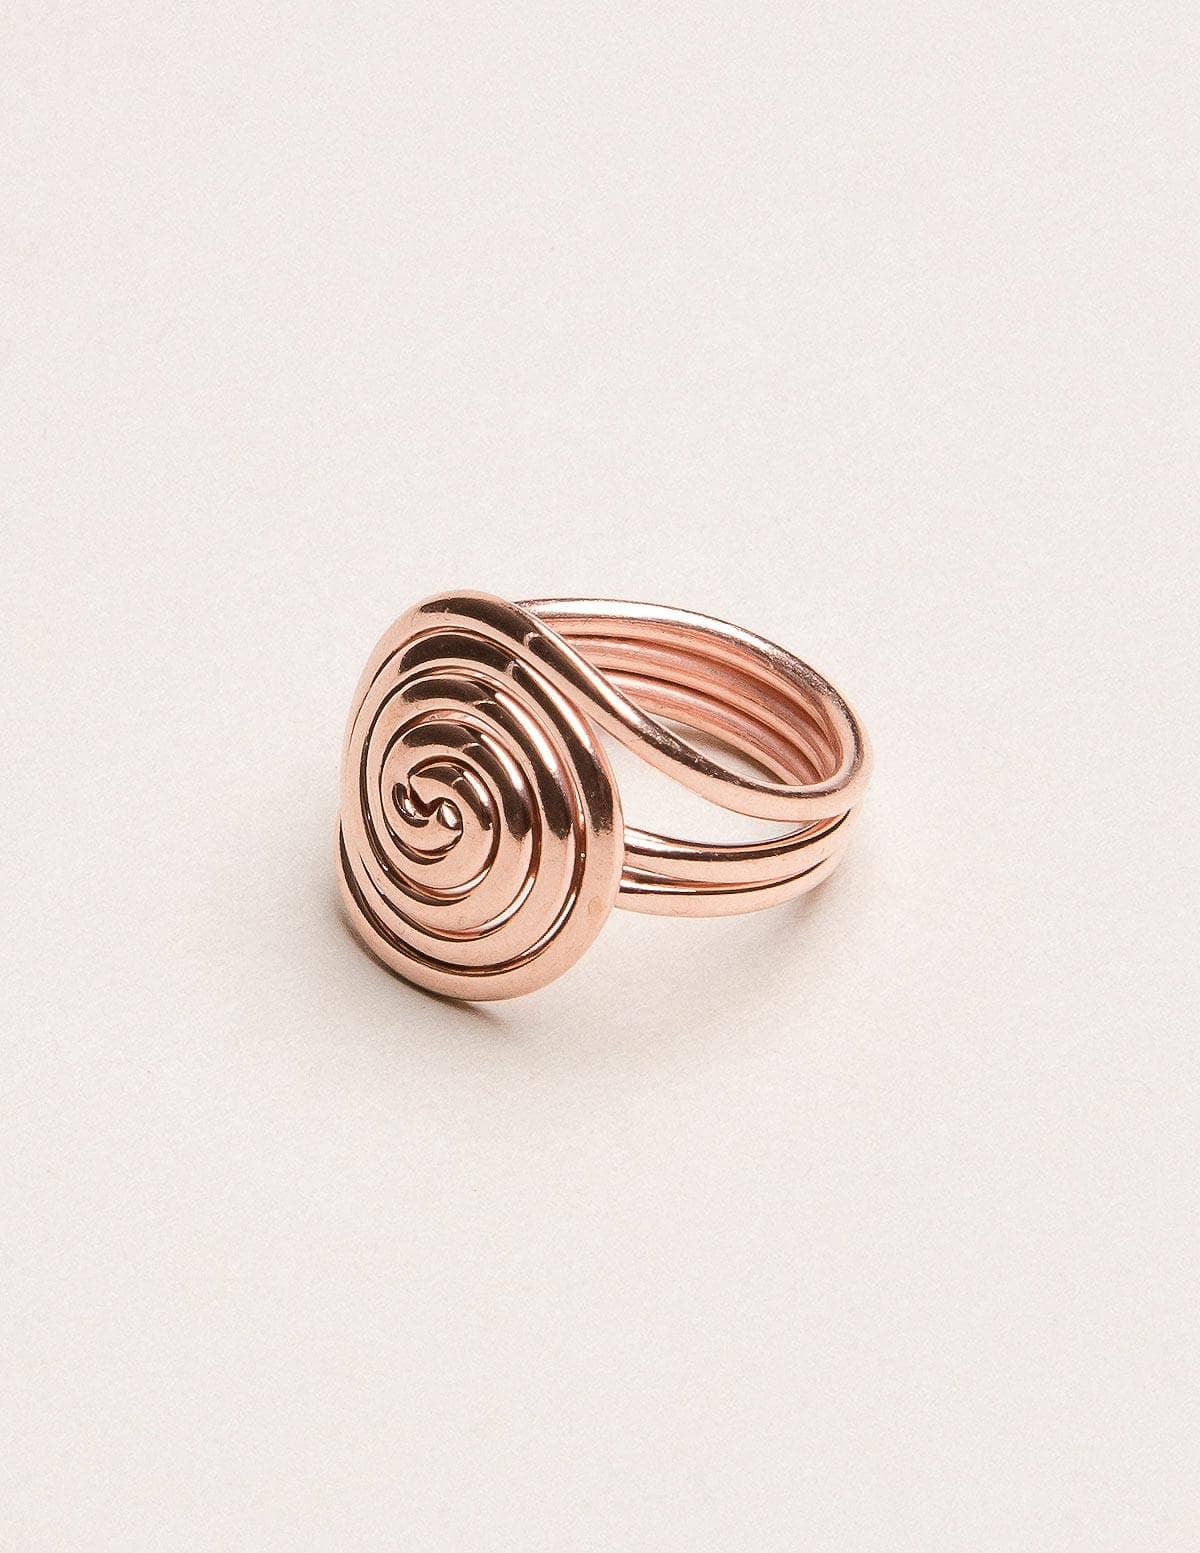 Handmade Copper Ring | Nepalese Rings | Wholesale